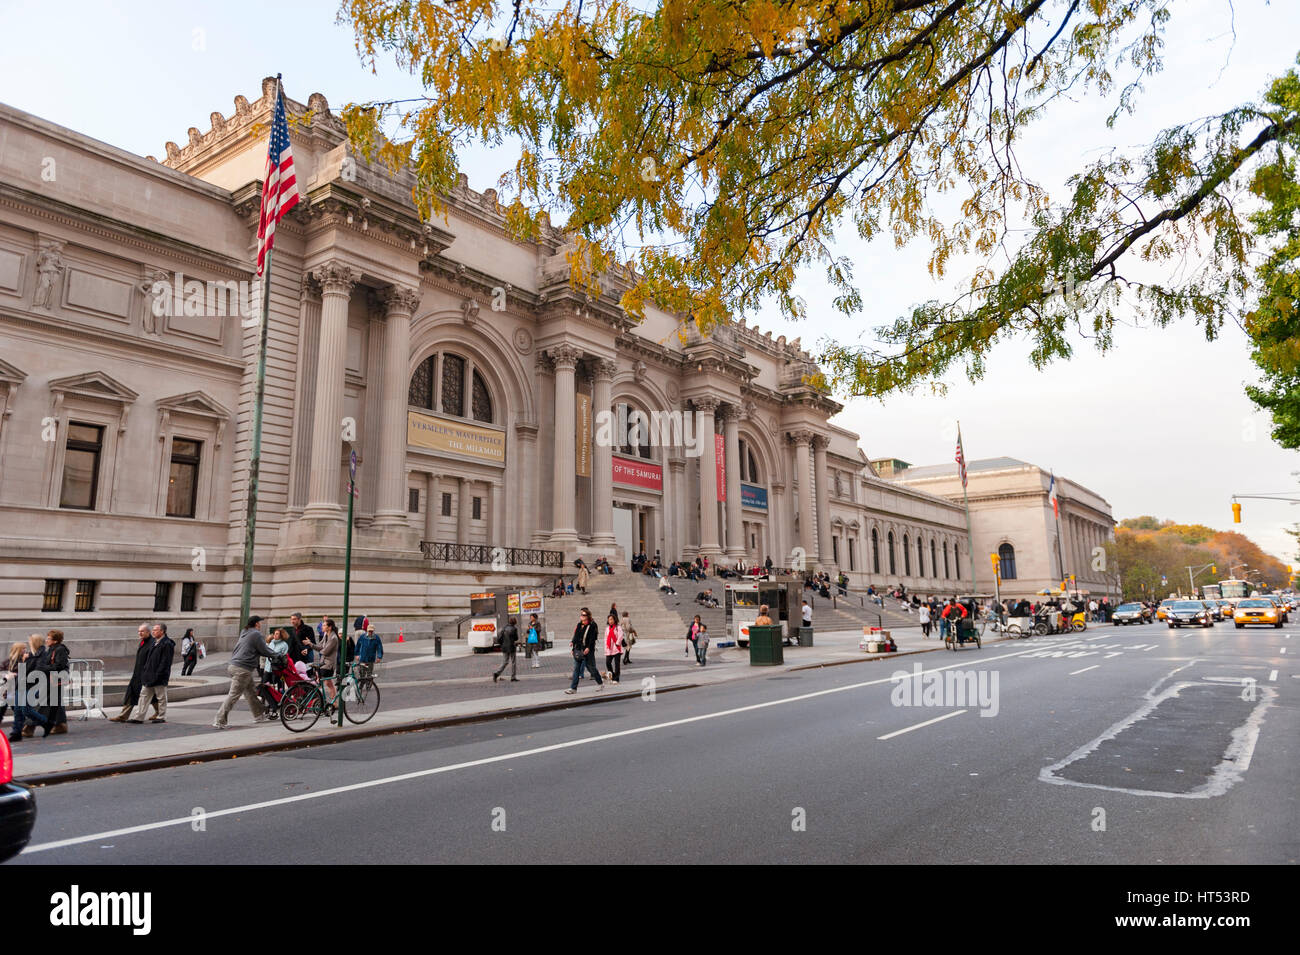 Façade du Metropolitan Museum of Art (le Met) sur la Cinquième Avenue, New York, NY, USA. Banque D'Images